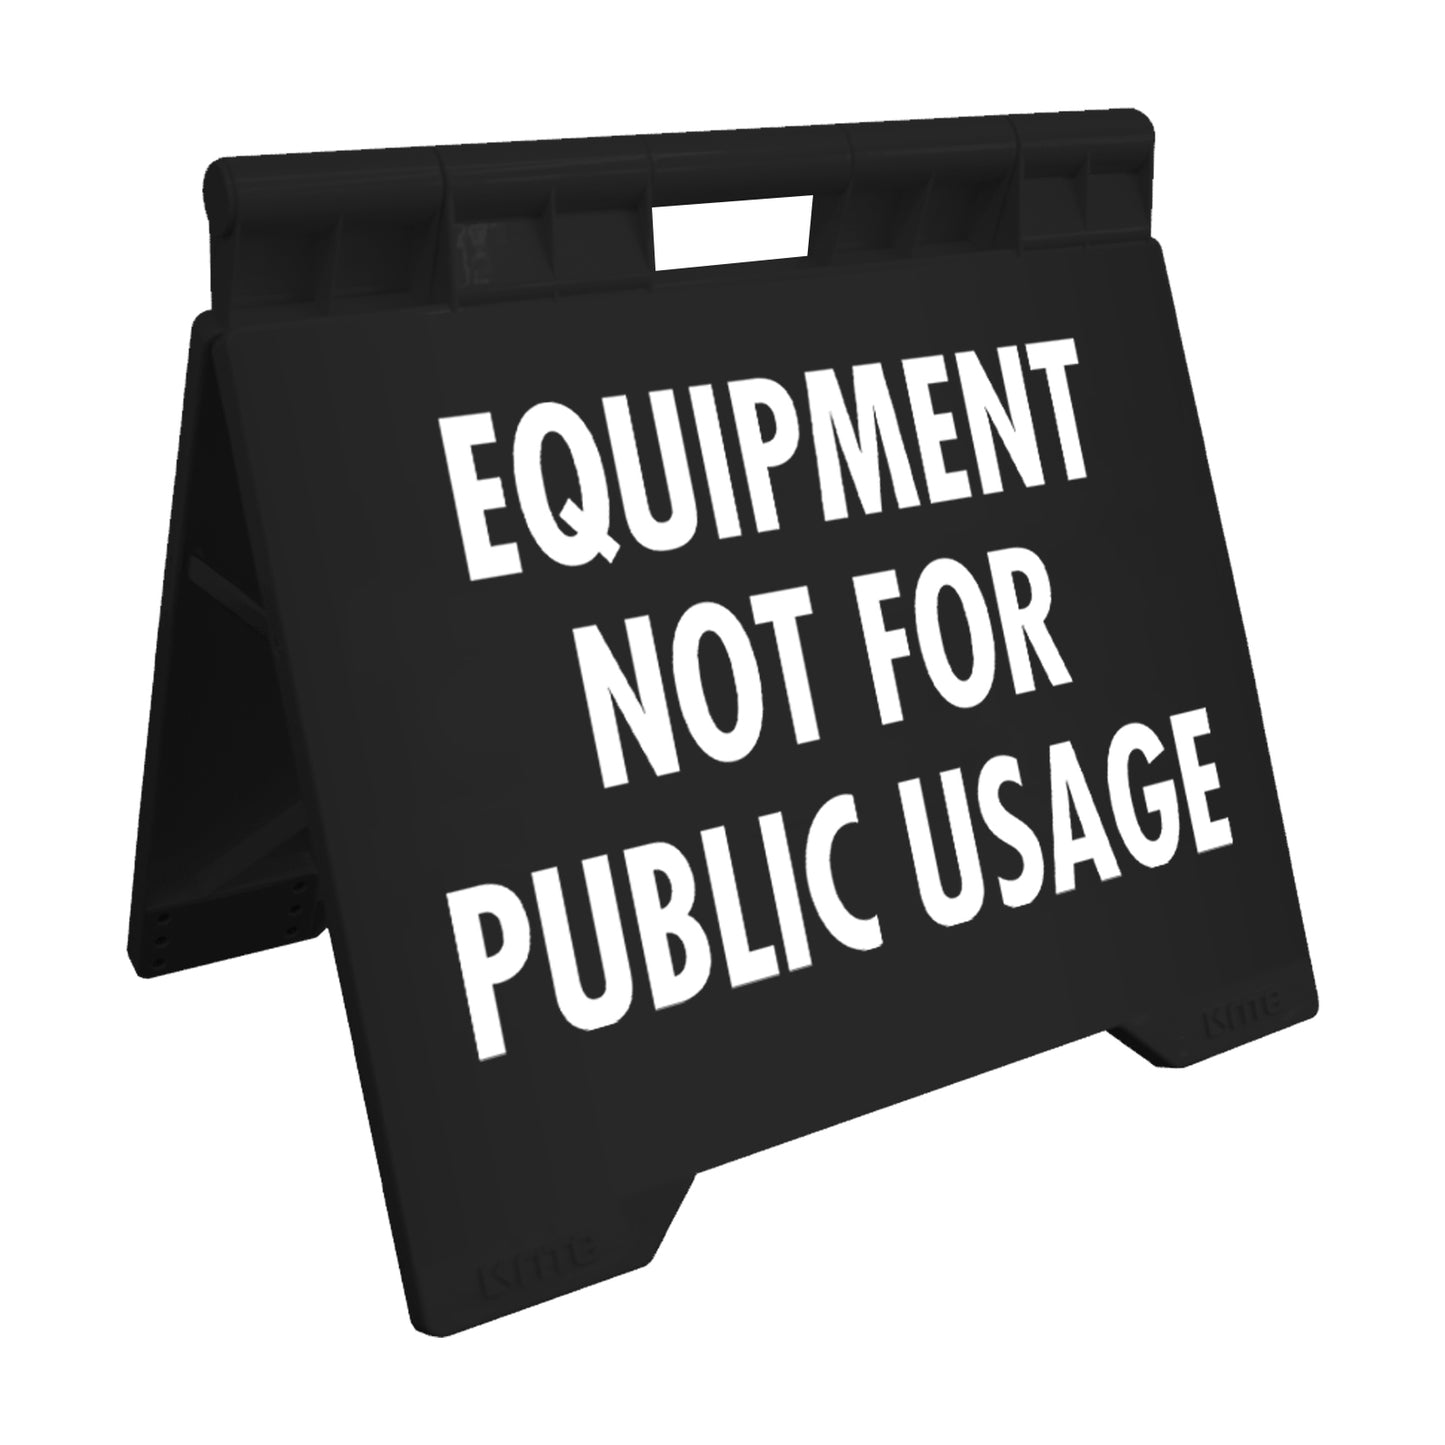 Equipment Not For Public Usage - Evarite A-Frame Sign